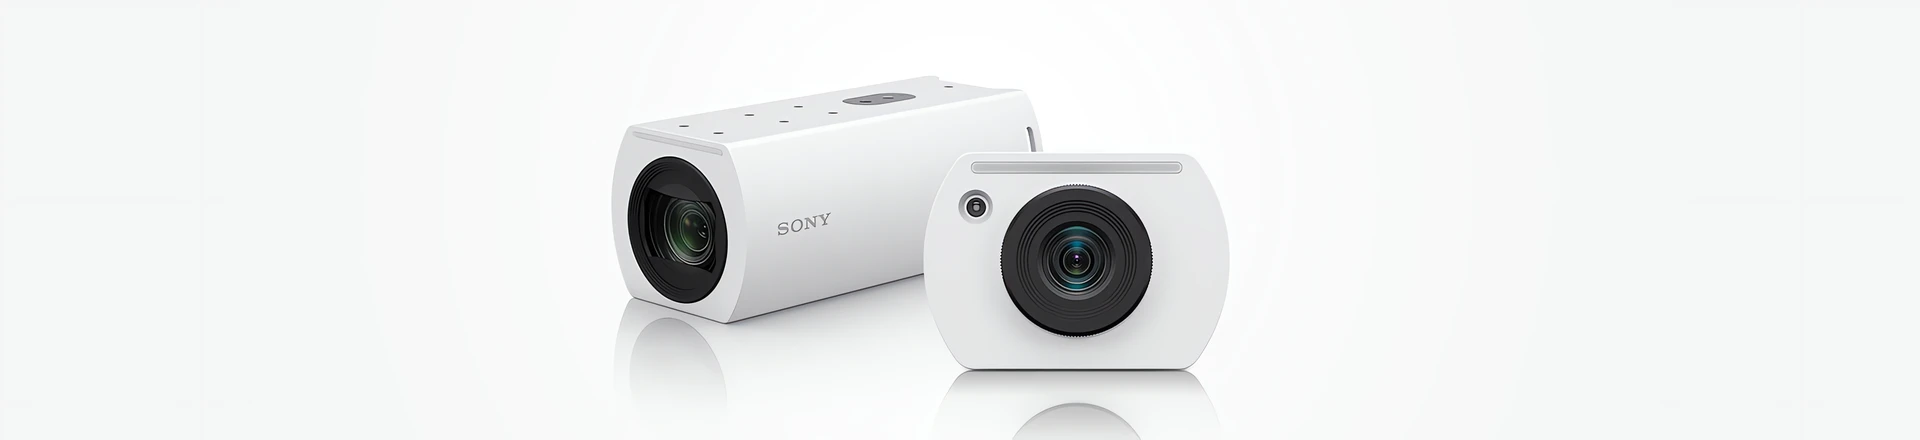 Sony SRG-XP1 i SRG-XB25 - zdalnie sterowane kamery 4K 60p 